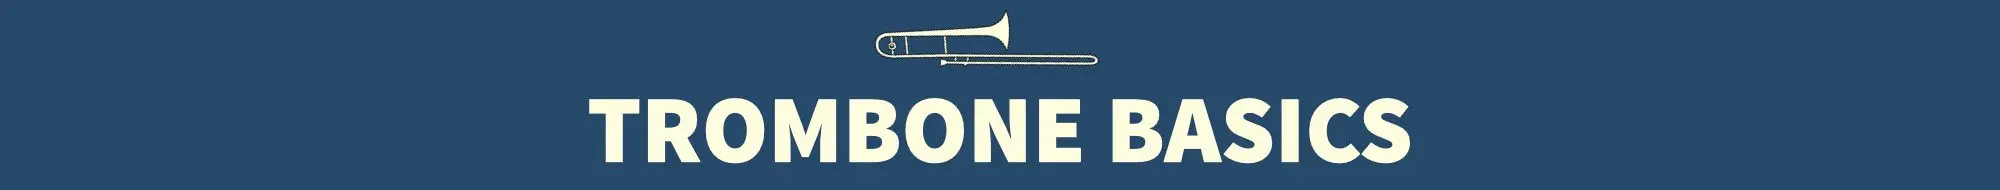 Trombone basics sheet music